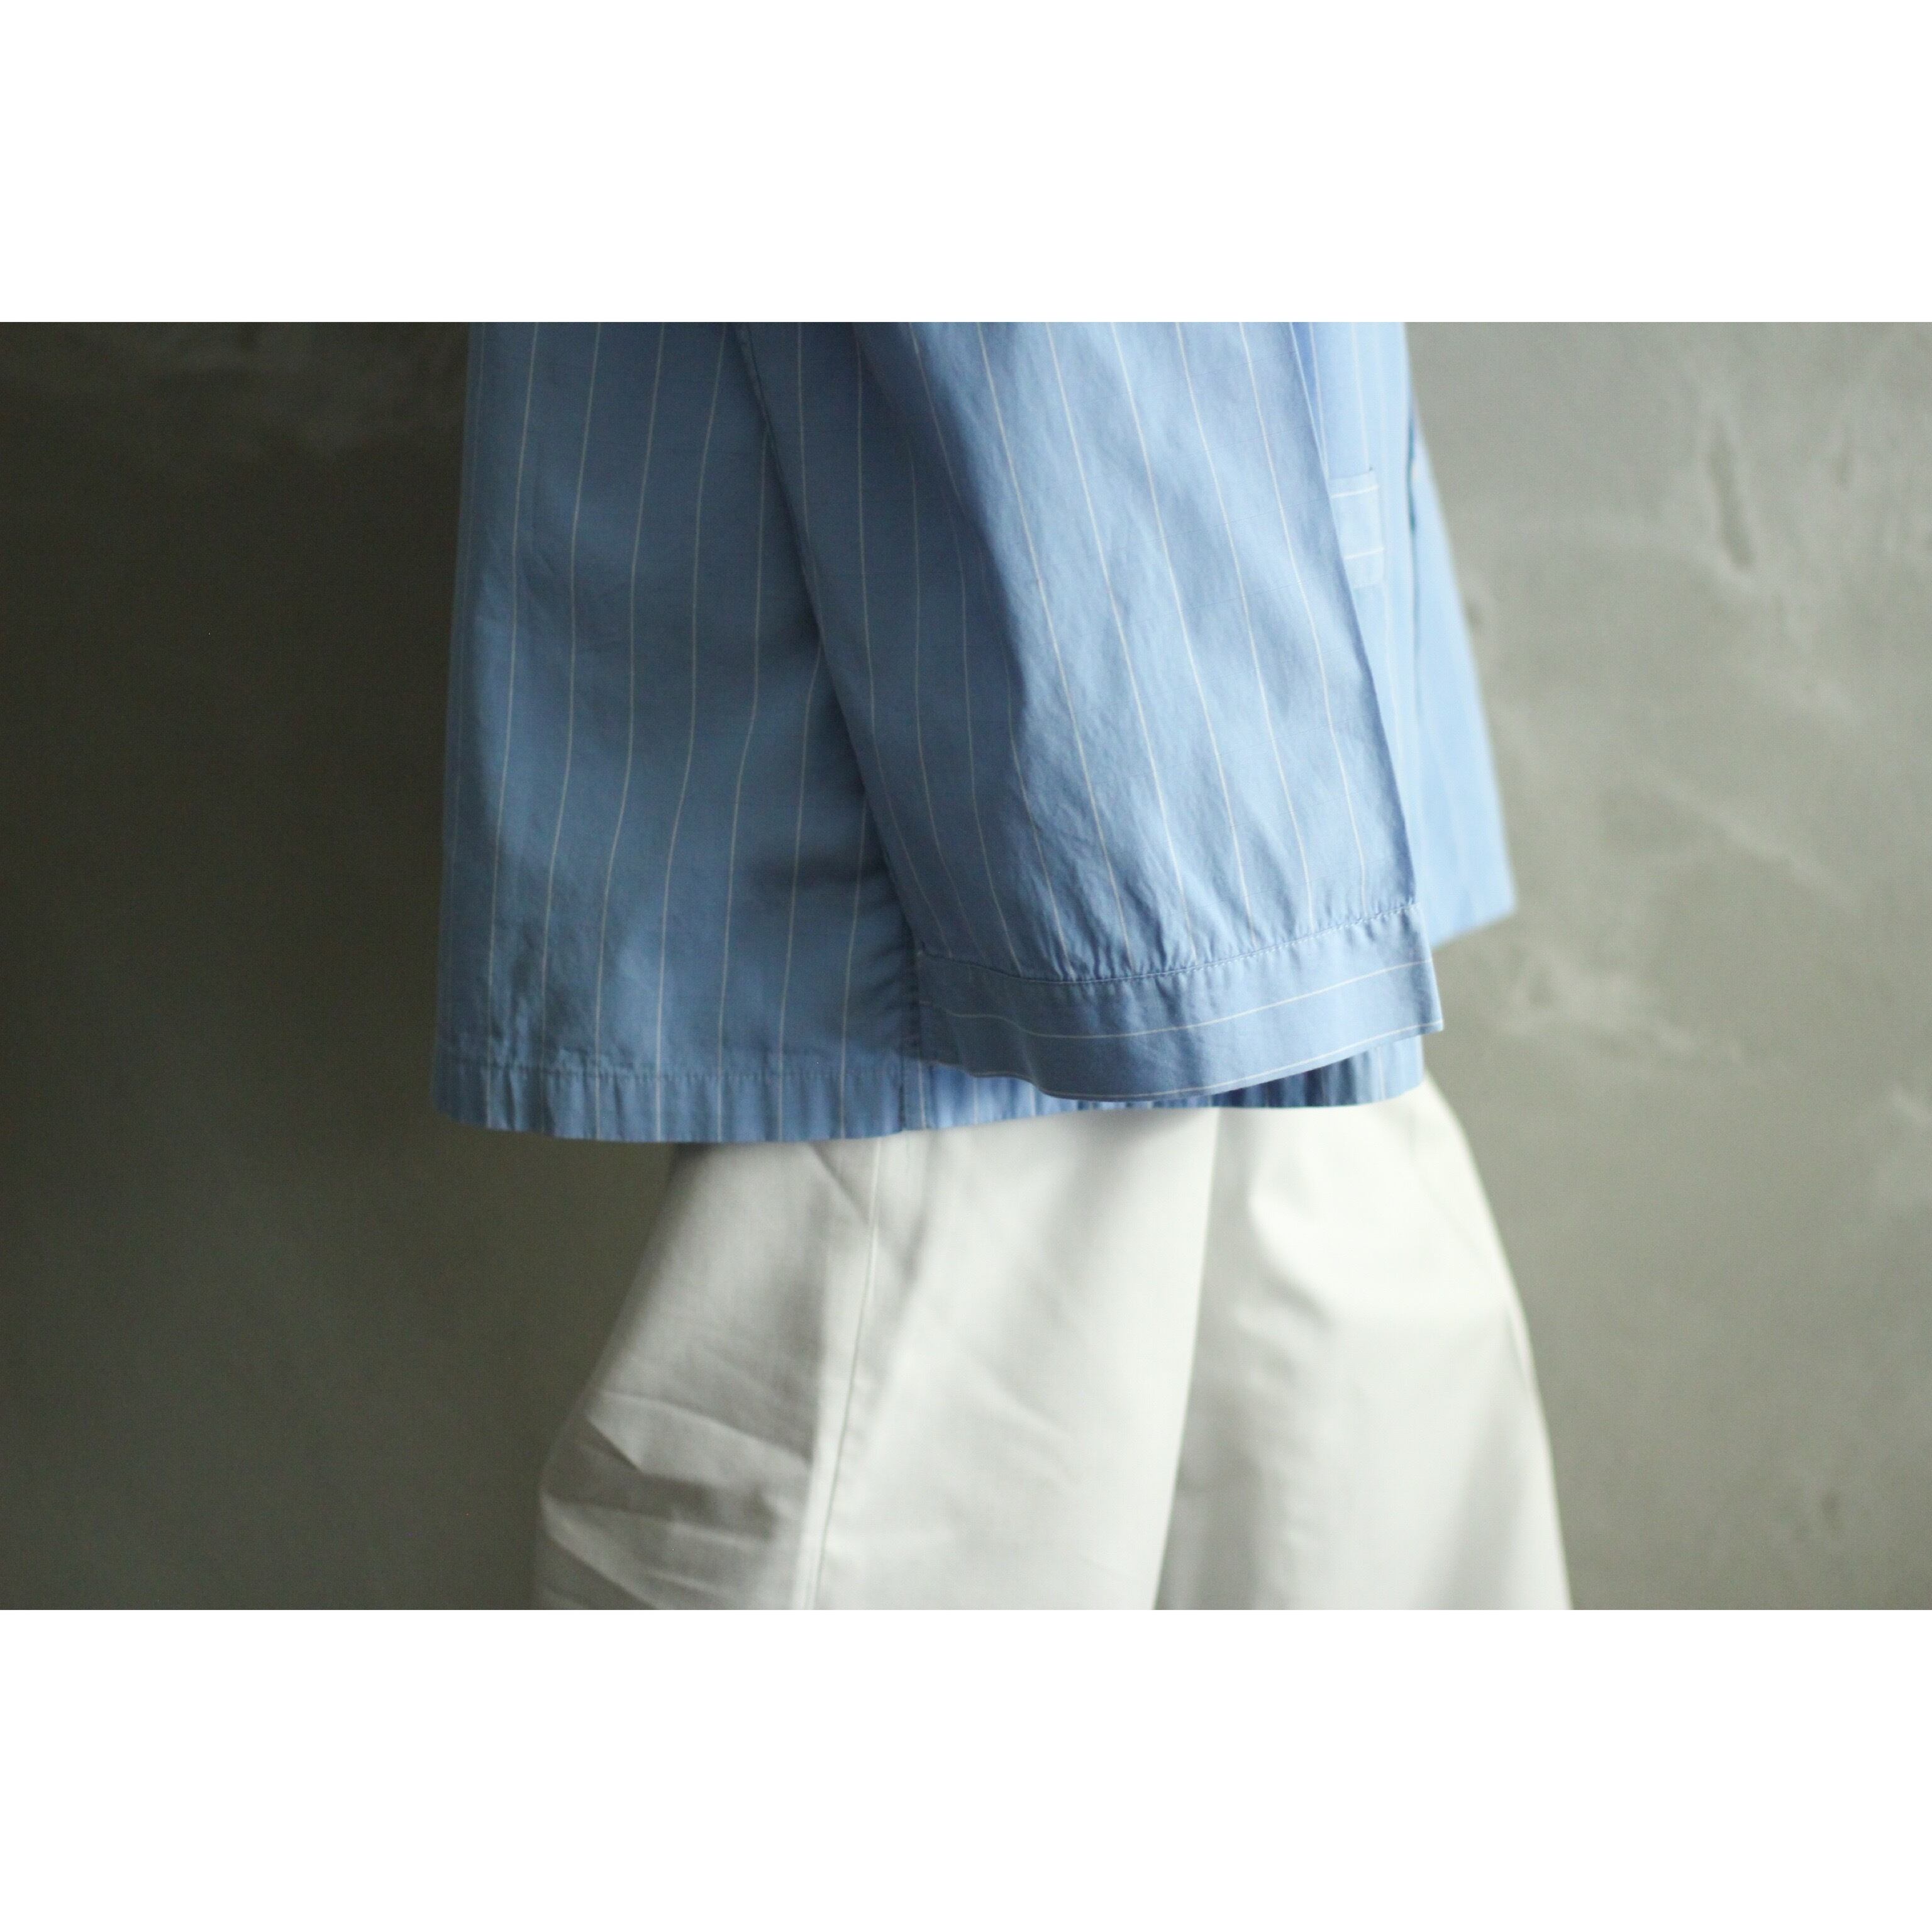 SAKS FIFTH AVENUE オーバーサイズ パジャマシャツ ストライプ スモークブルー Made In Italy【OT-1127】 cv